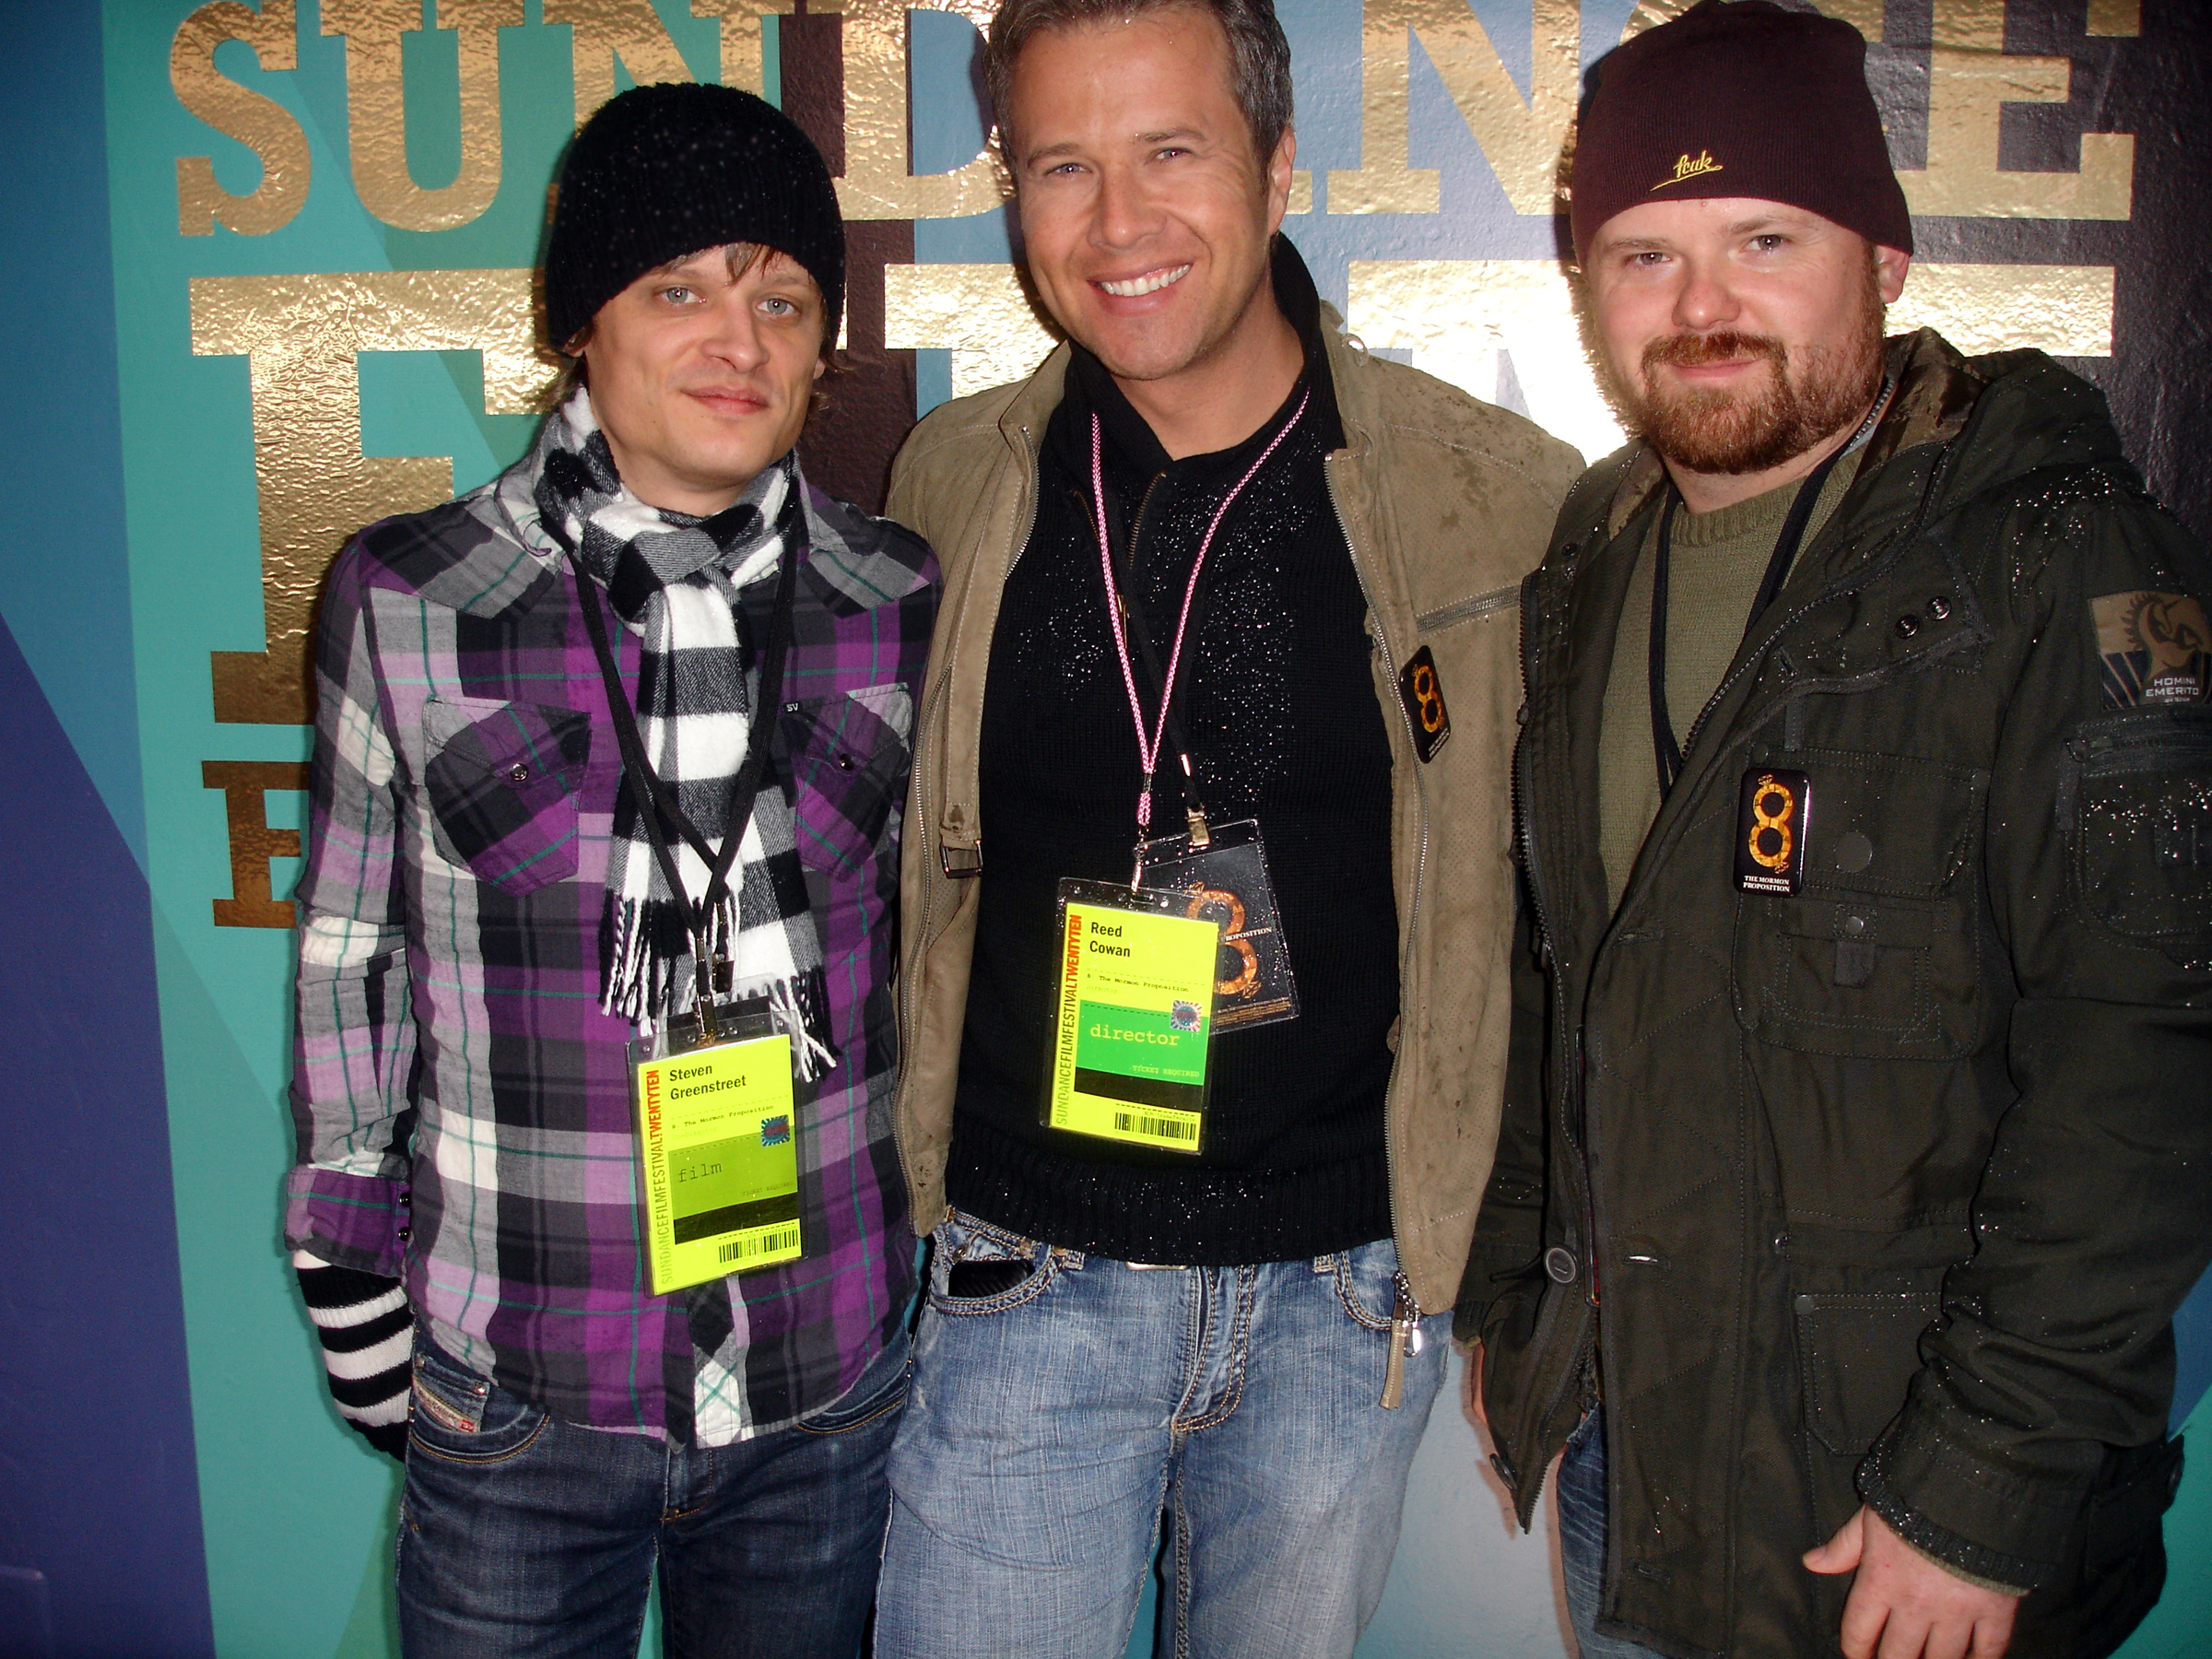 Steven Greenstreet, Reed Cowan, and Chris Volz at the 2010 Sundance Film Festival.